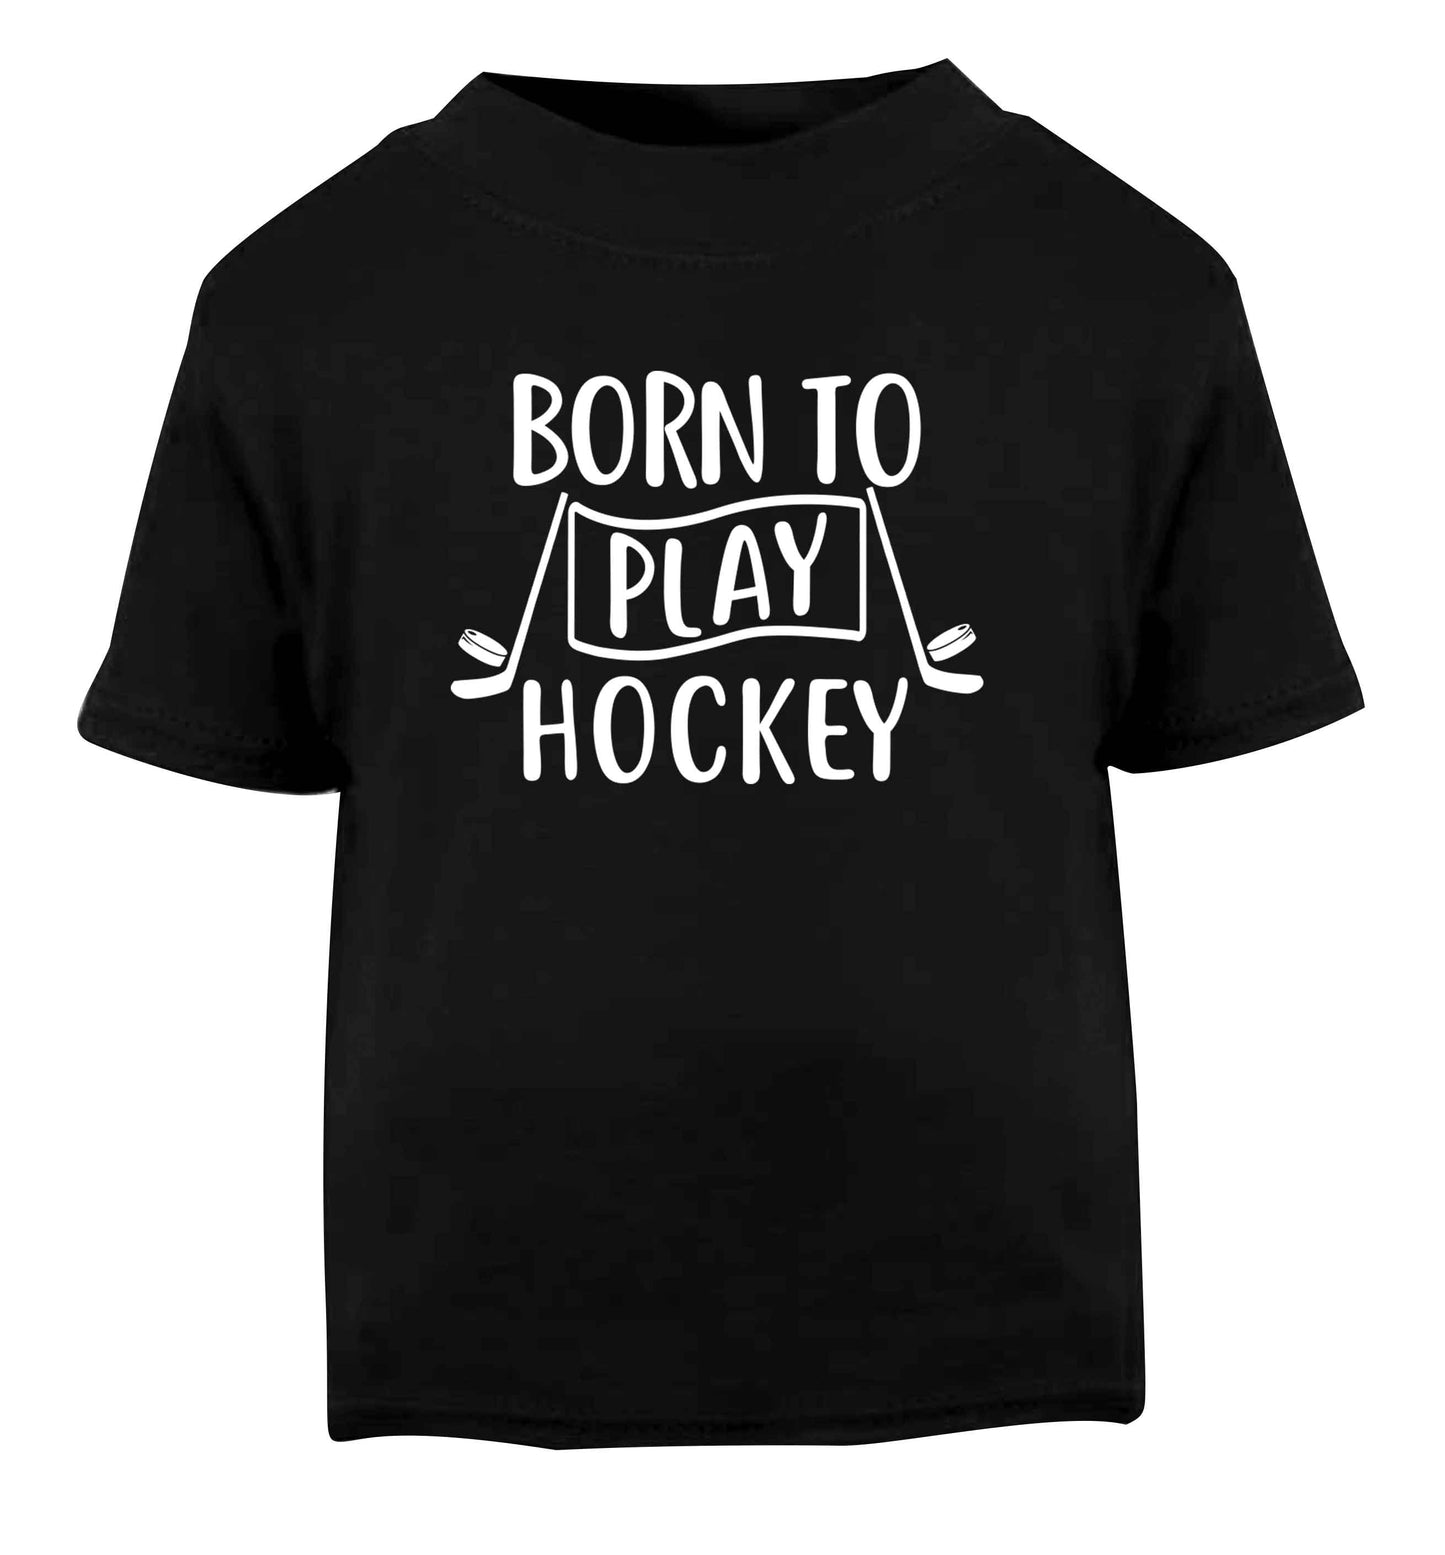 Born to play hockey Black Baby Toddler Tshirt 2 years